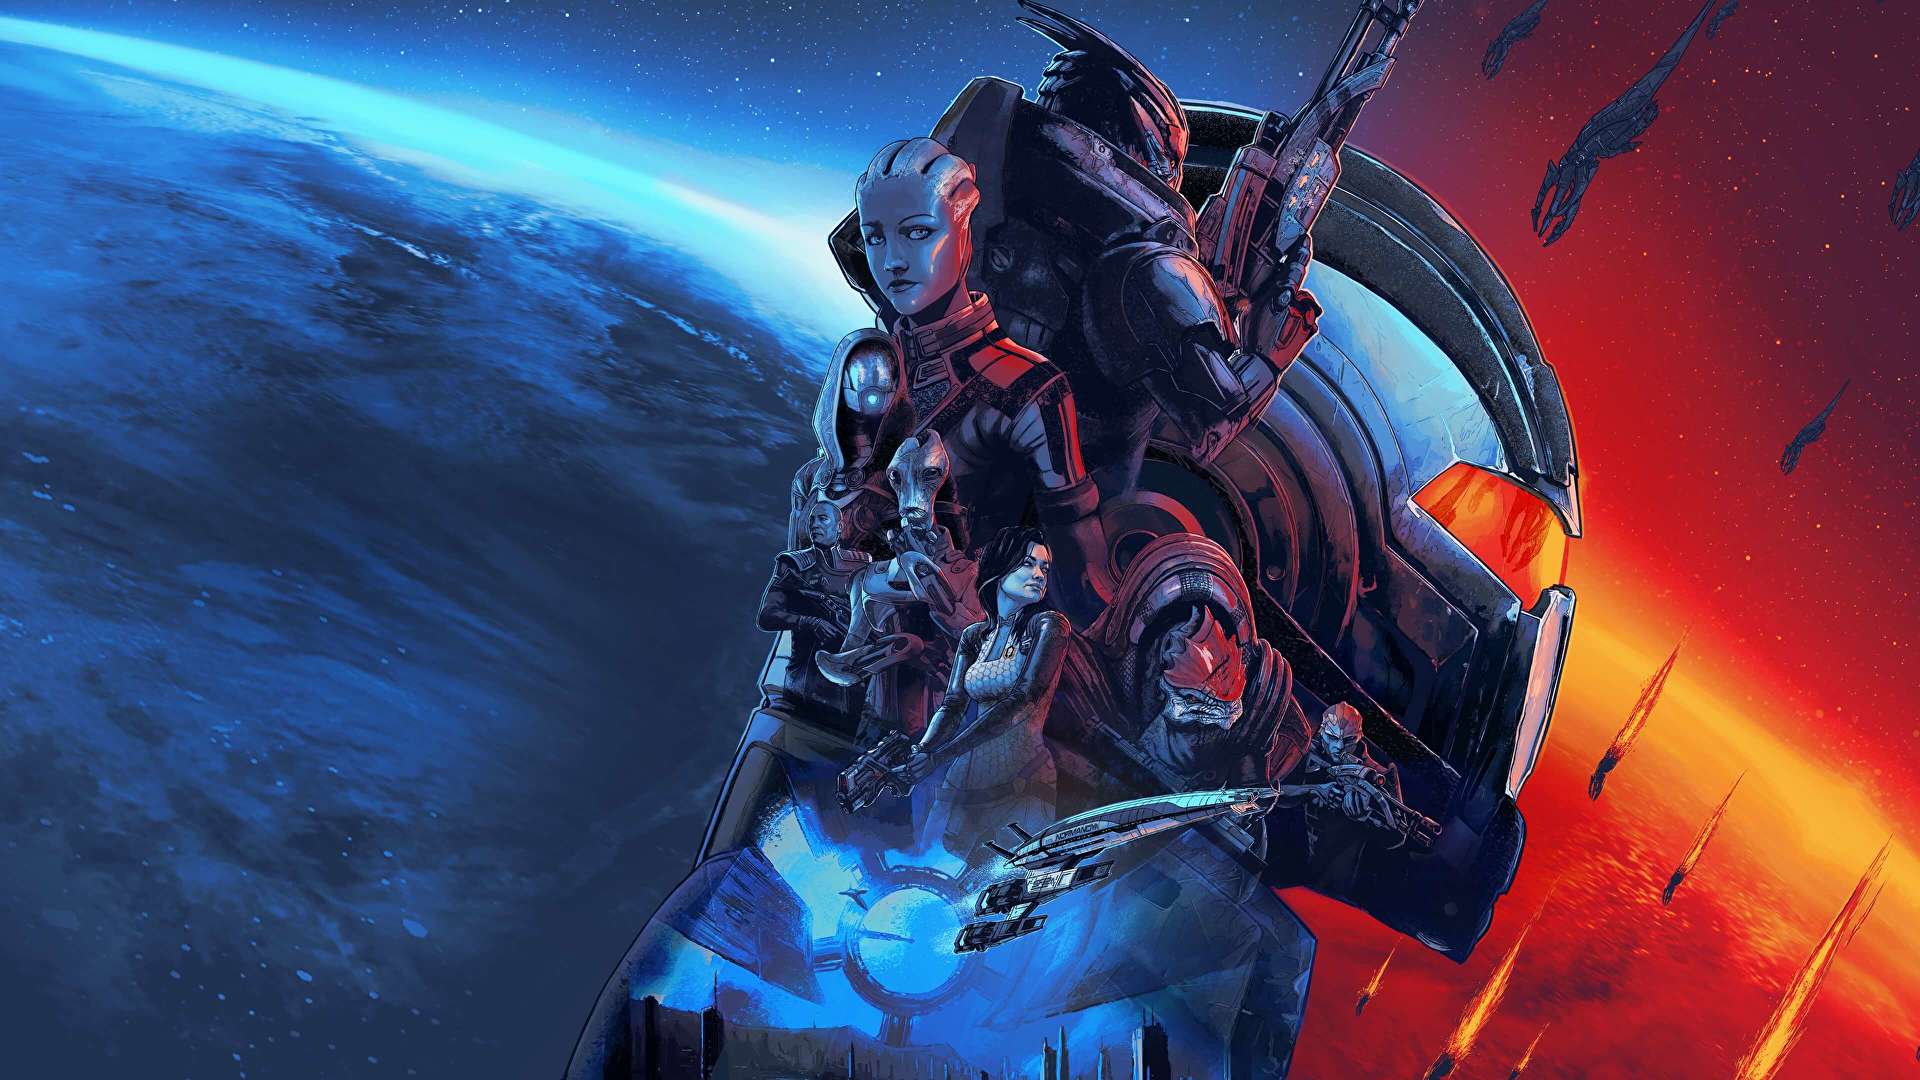 BioWare releases free Mass Effect content package. Rock Paper Shotgun